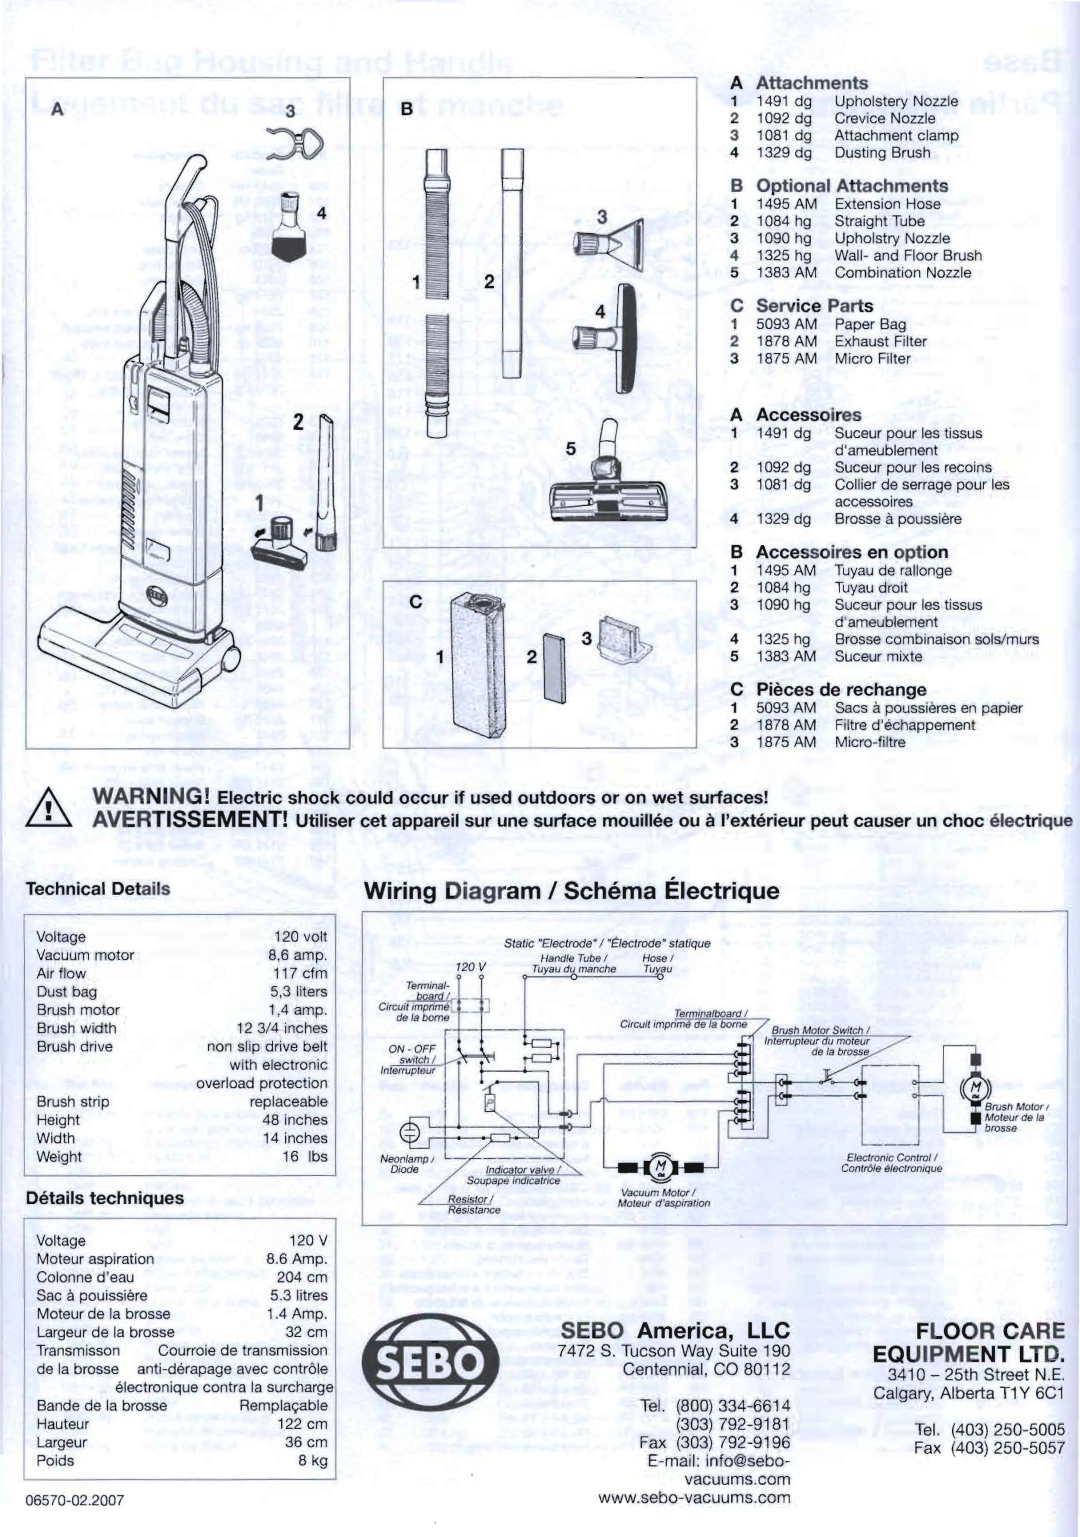 Sebo 370 warranty 20 3­, Wiring Diagram I Schema Electrique, SEBO America, LLC, Floor Care 